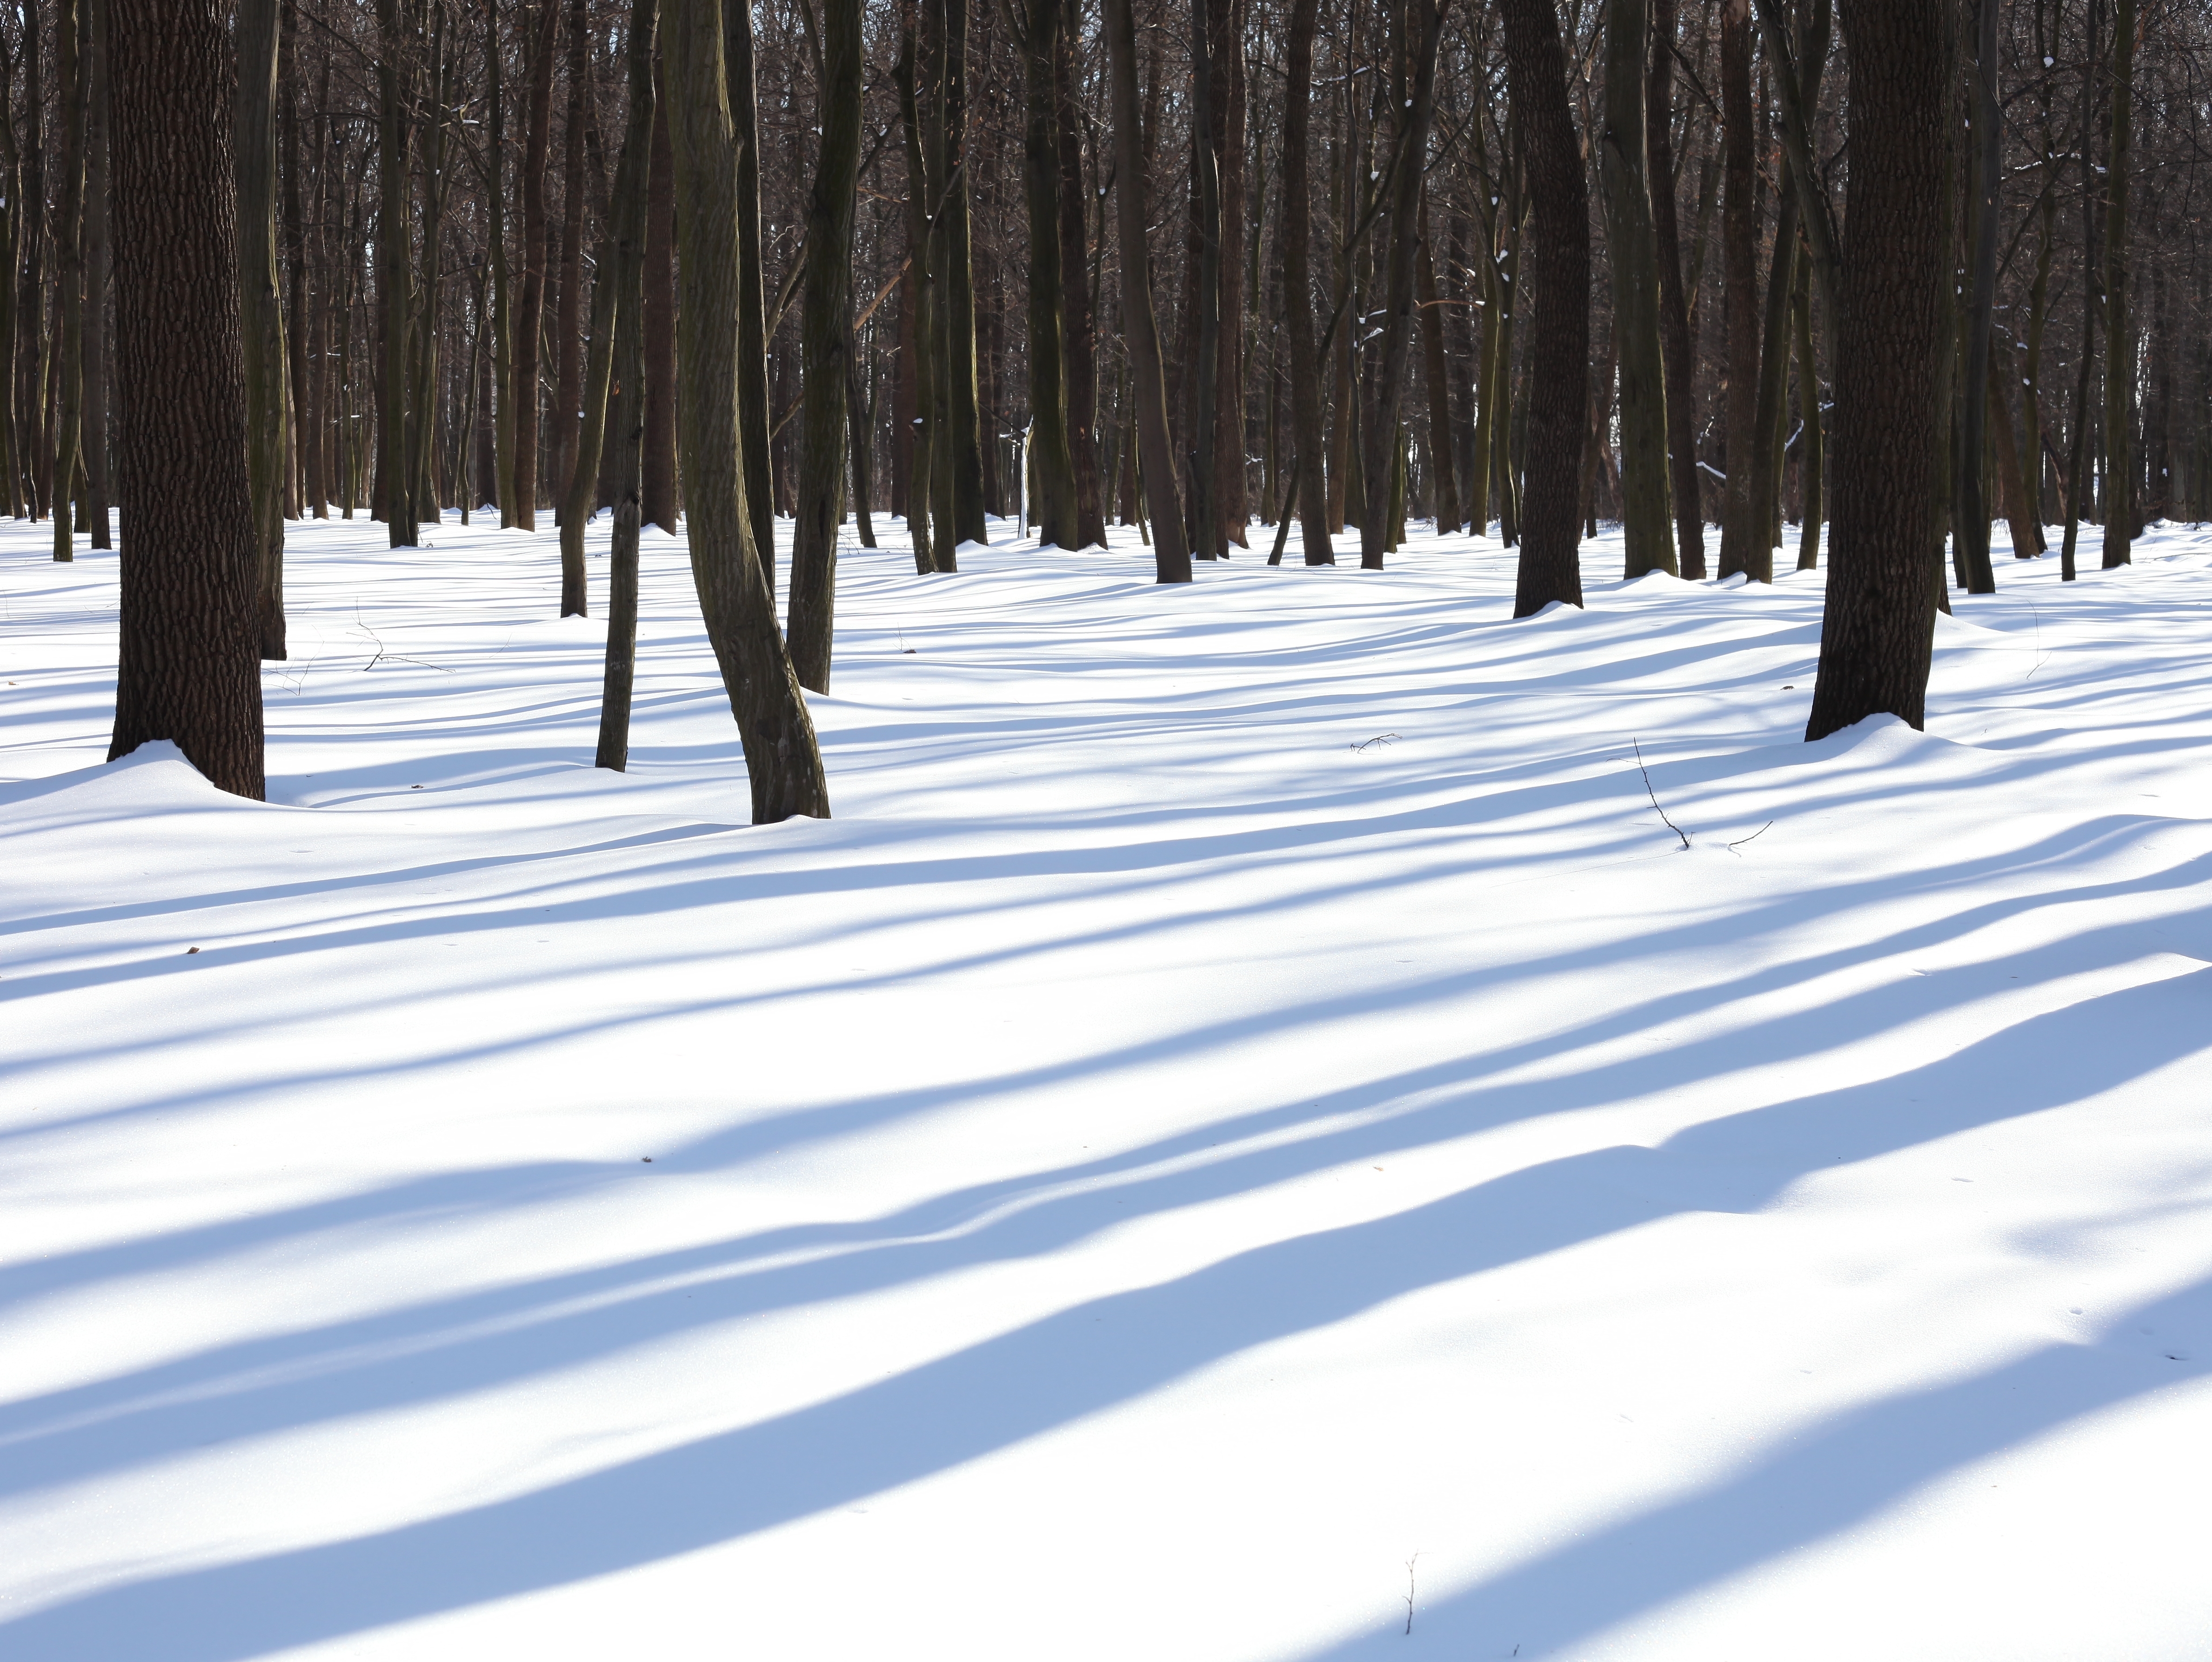 long tree shadows on the snow